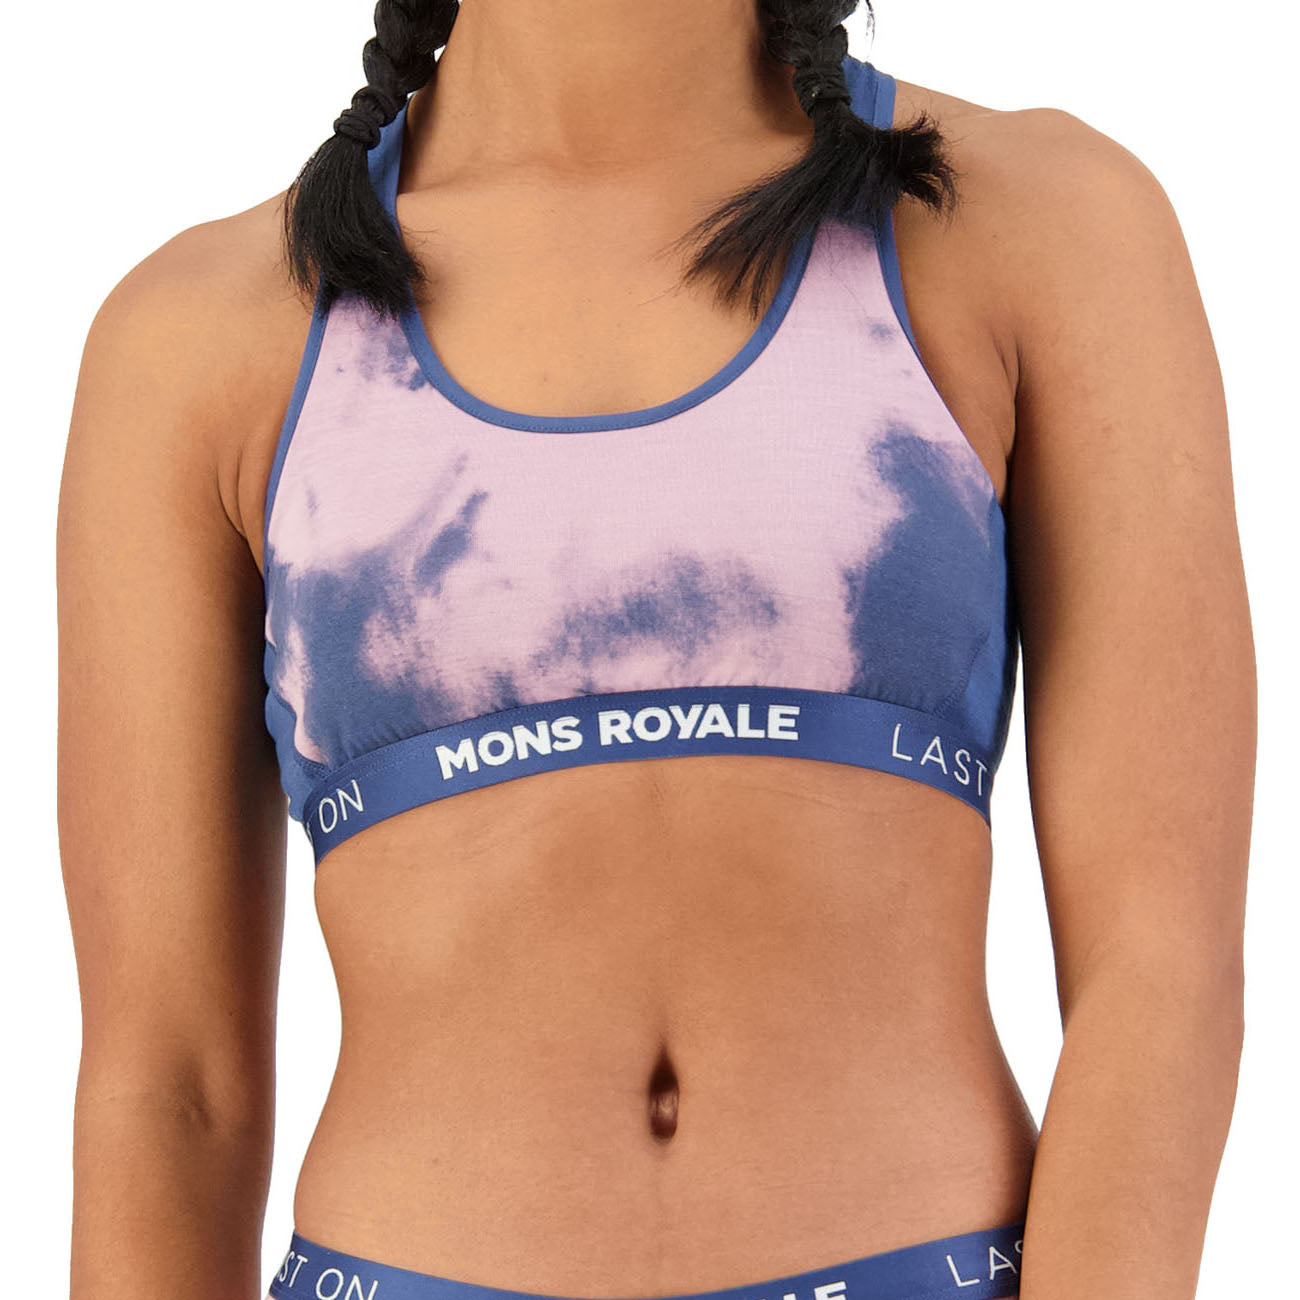 Mons Royale Sierra Sports Bra Denim Tie Dye XL